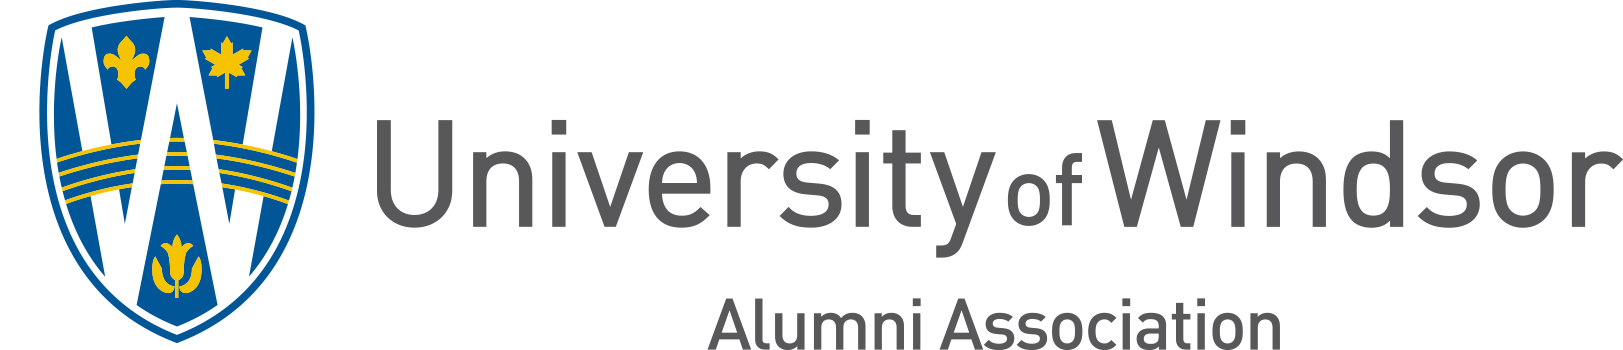 University of Windsor, Alumni Association Logo